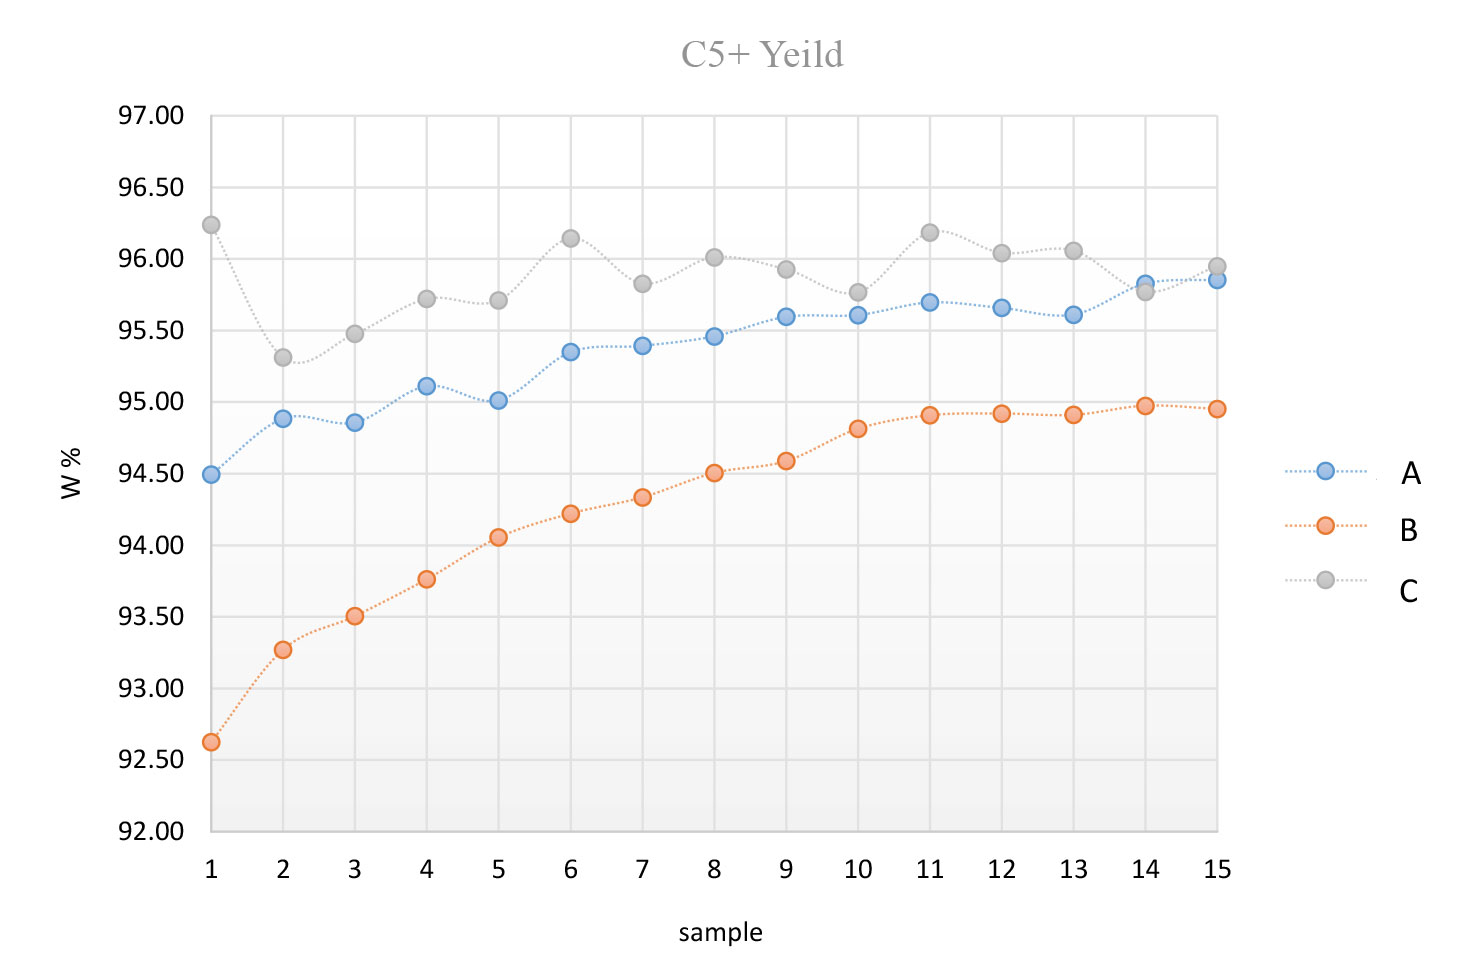 C+5 Yield